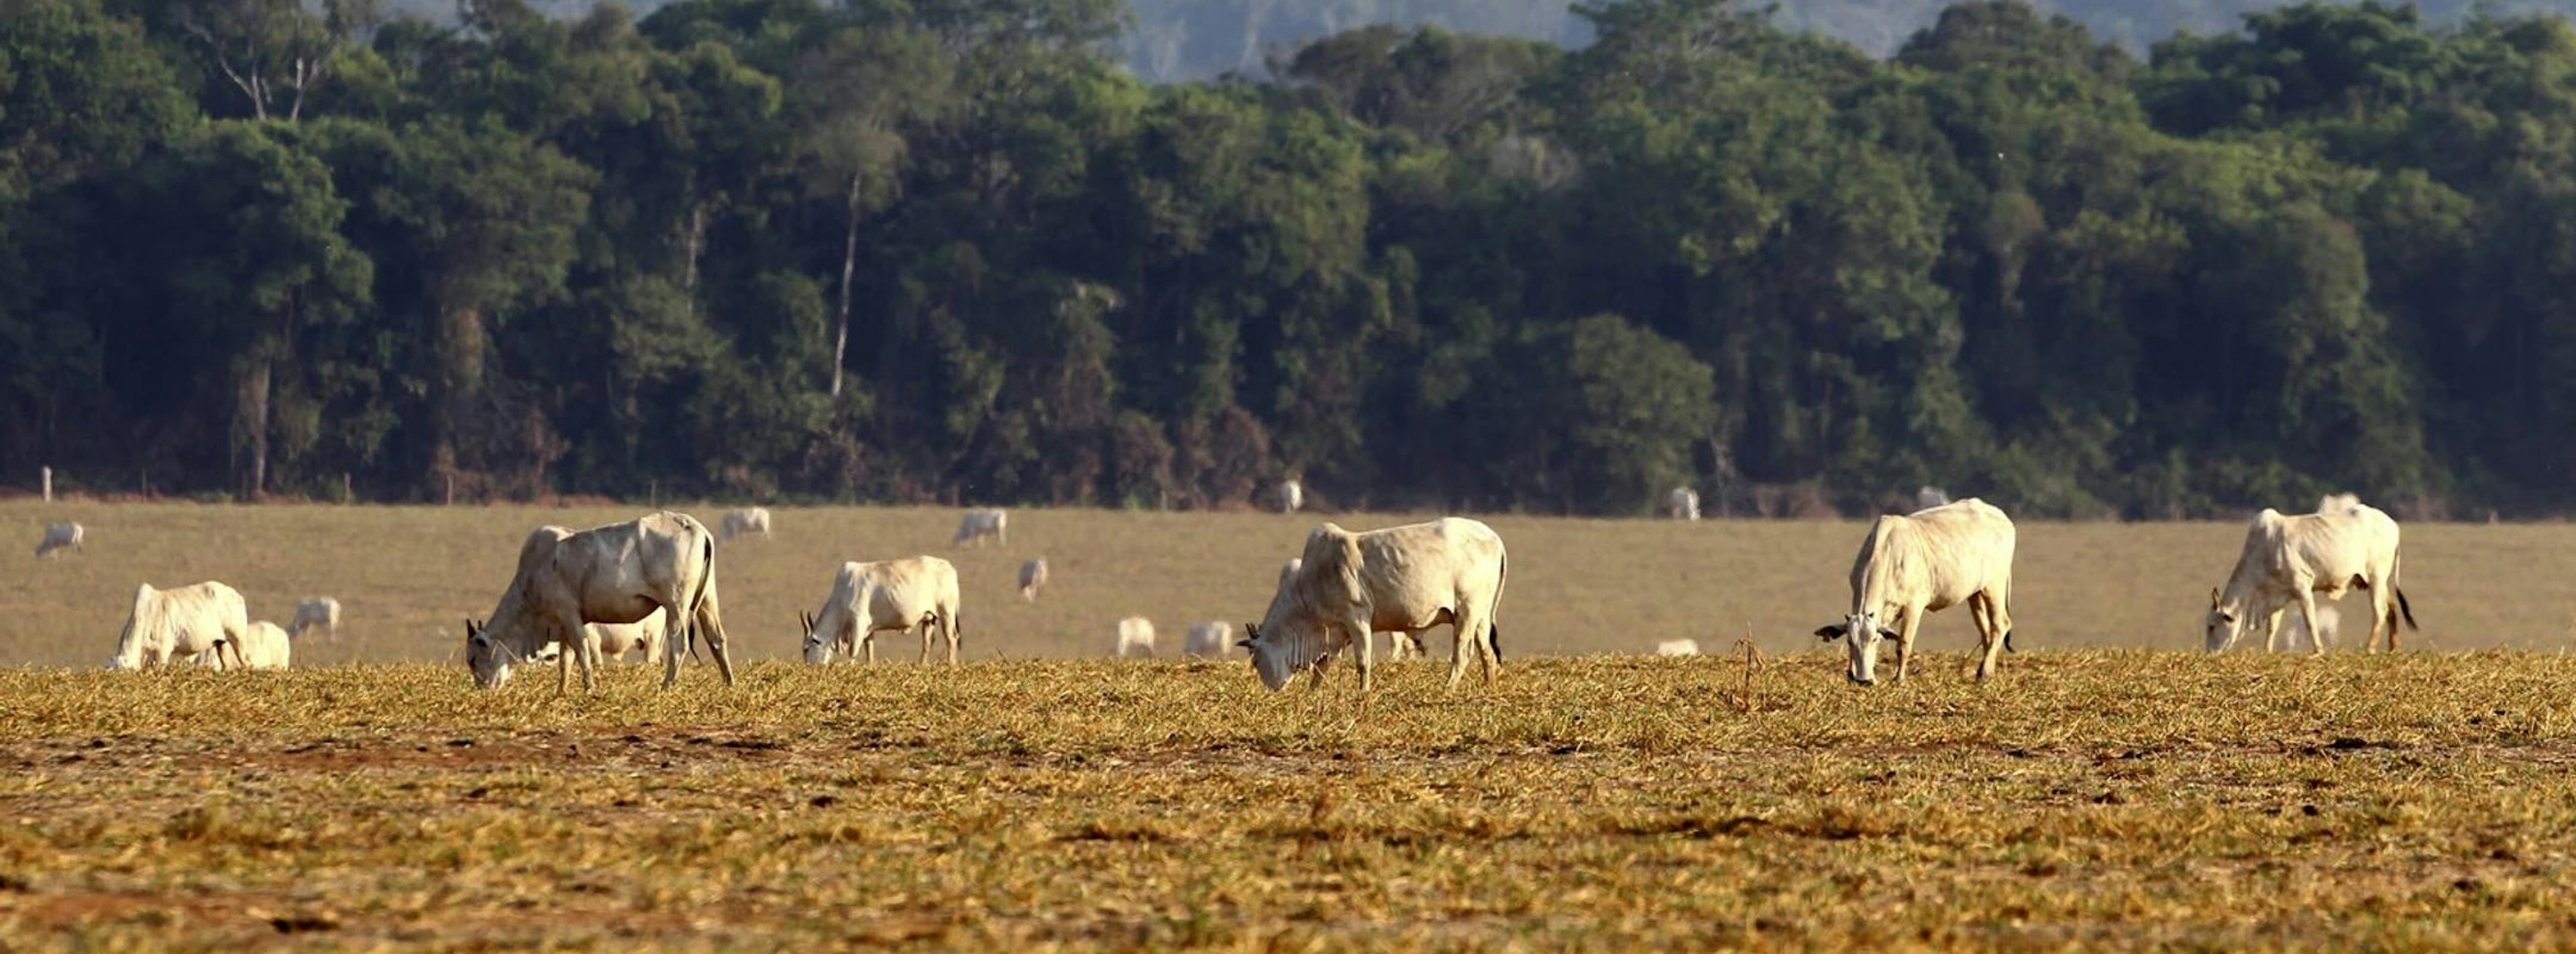 cattle grazing, Brazil